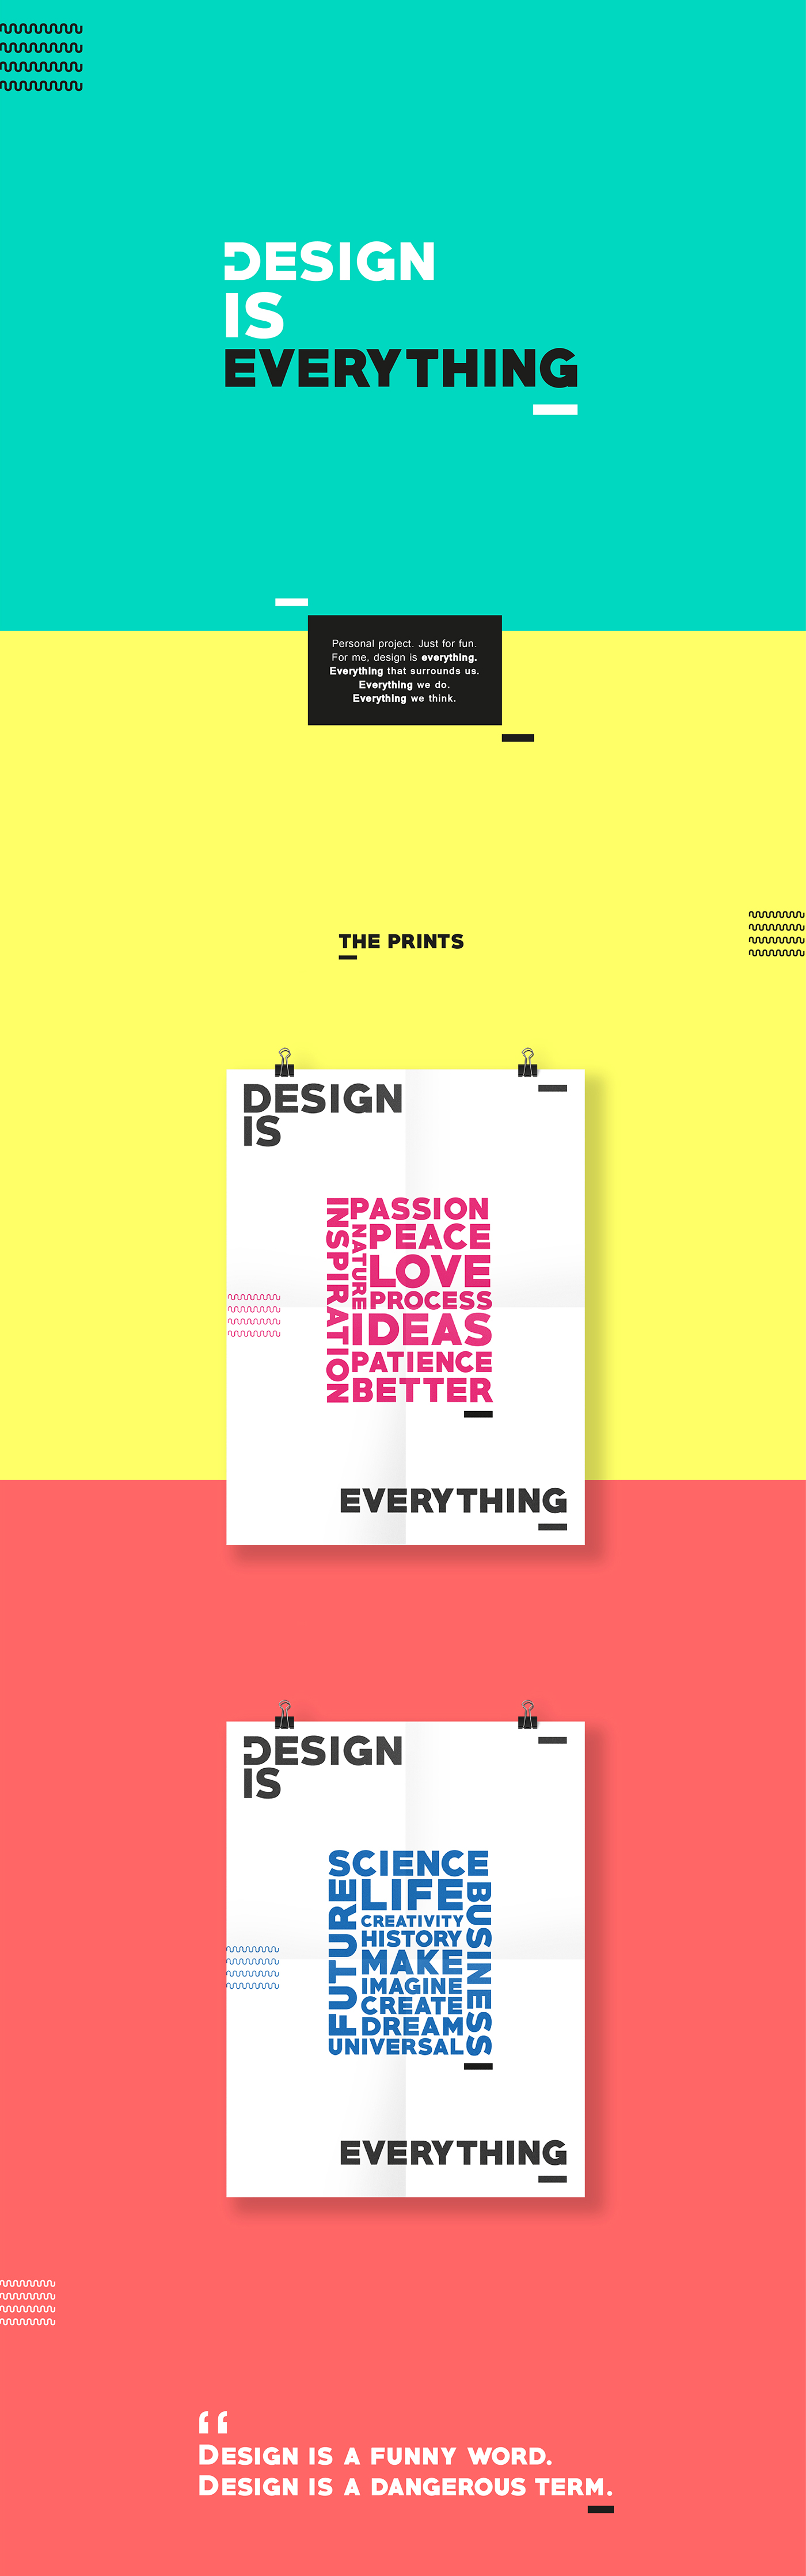 #typography #playing #frelance #colors #minimalist lima peru Freelance prints poster design